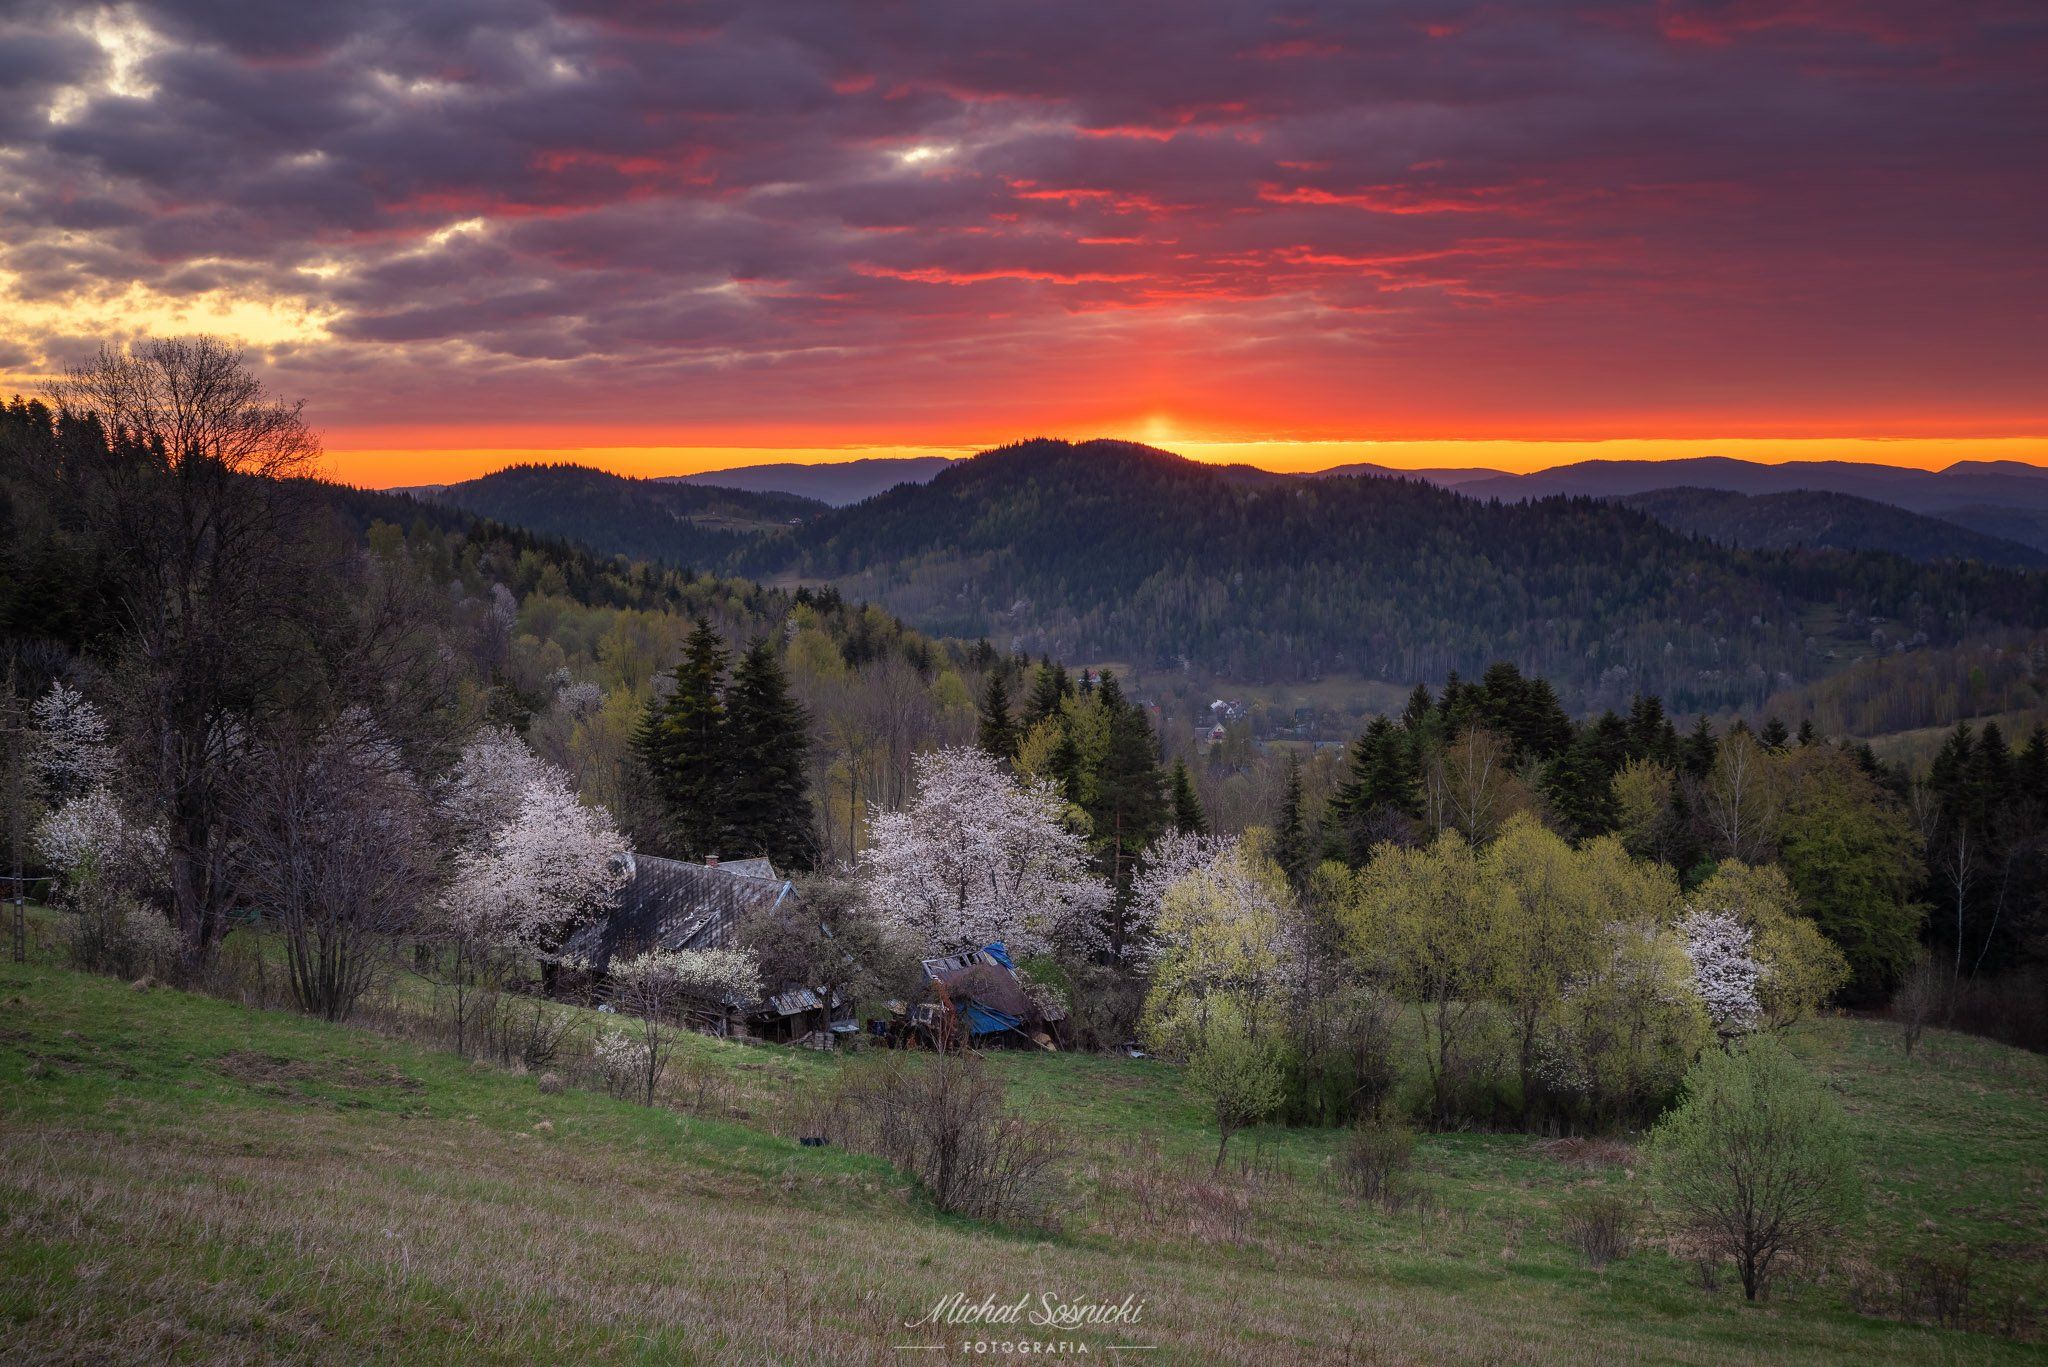 #spring #zawoja #landscape #sky #sunrise #mountains #morning #pentax #benro, Michał Sośnicki